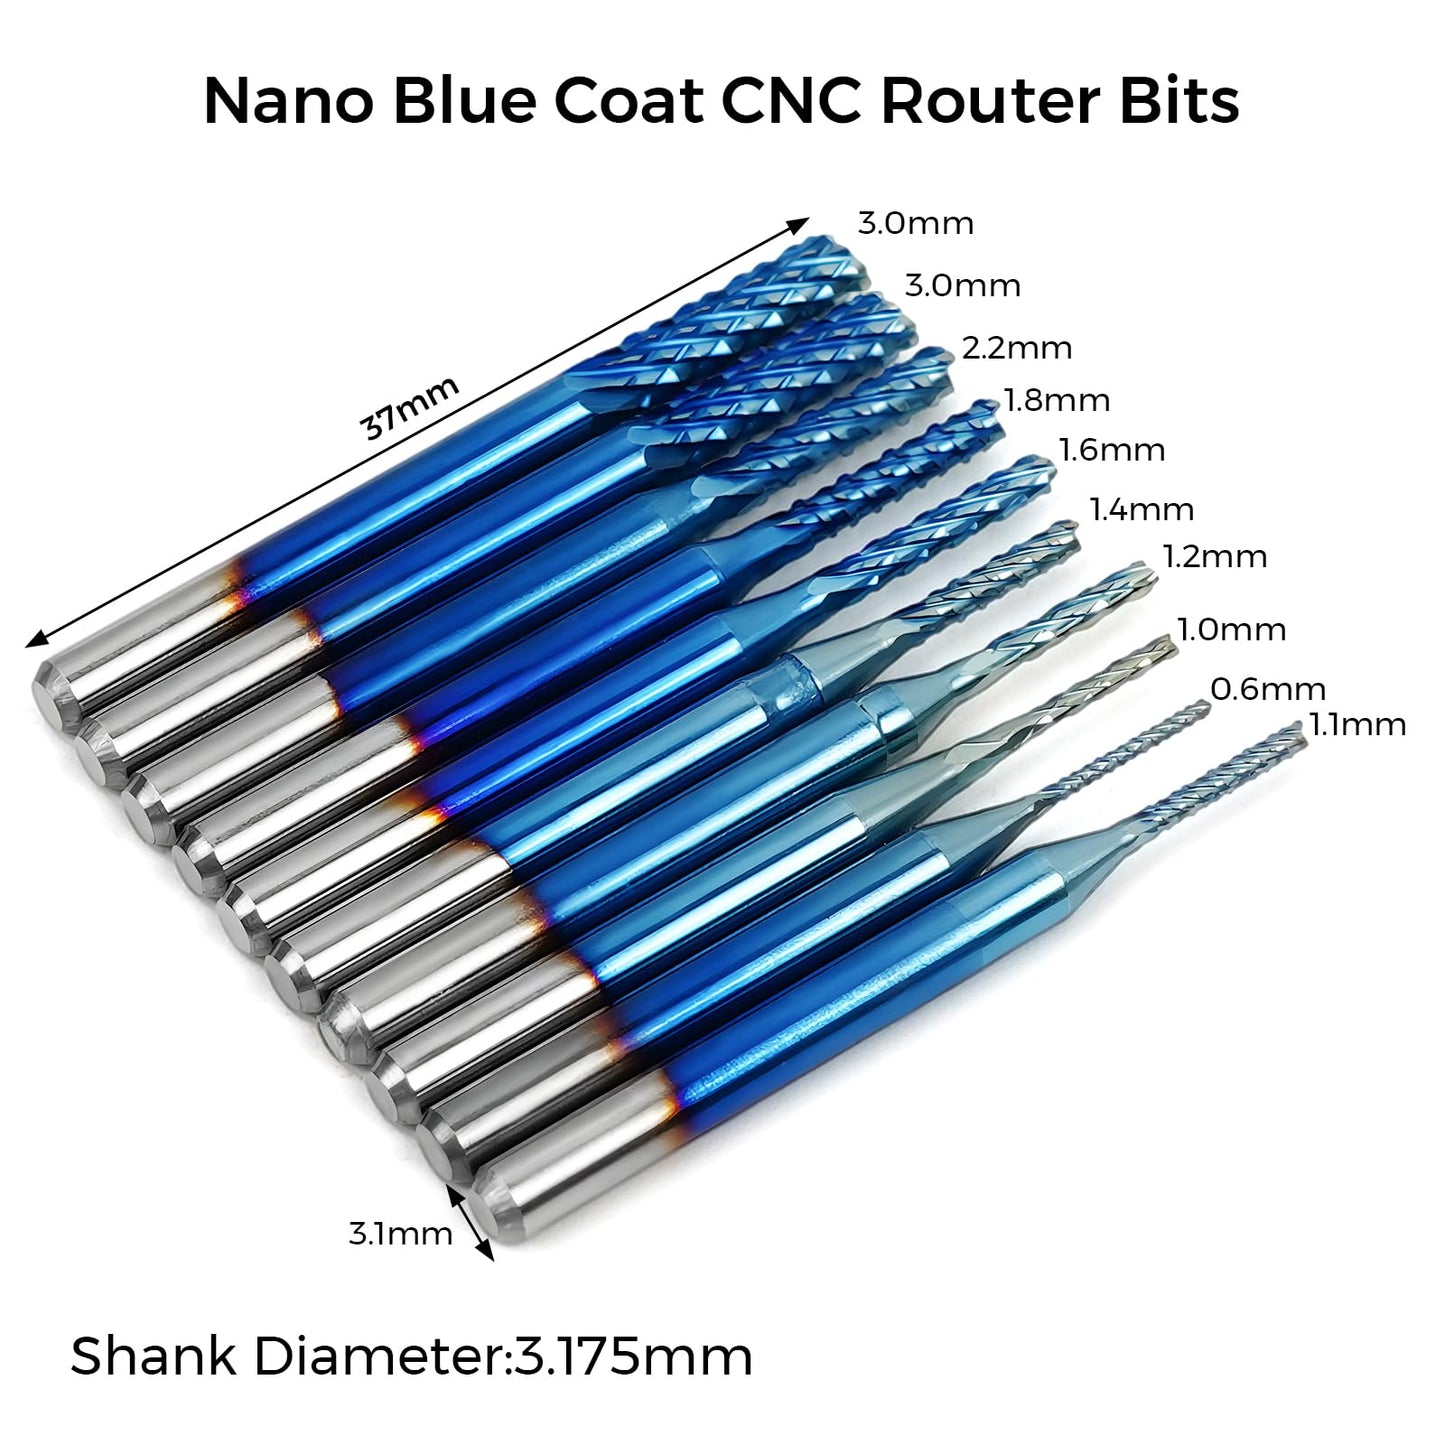 OUYANG 40Pcs End Mill CNC Router Bits, 1/8" Shank CNC Engraving Bits, 2 Flute Flat Nose and Ball Nose Carbide Endmill, Nano Blue Coat and Titanium